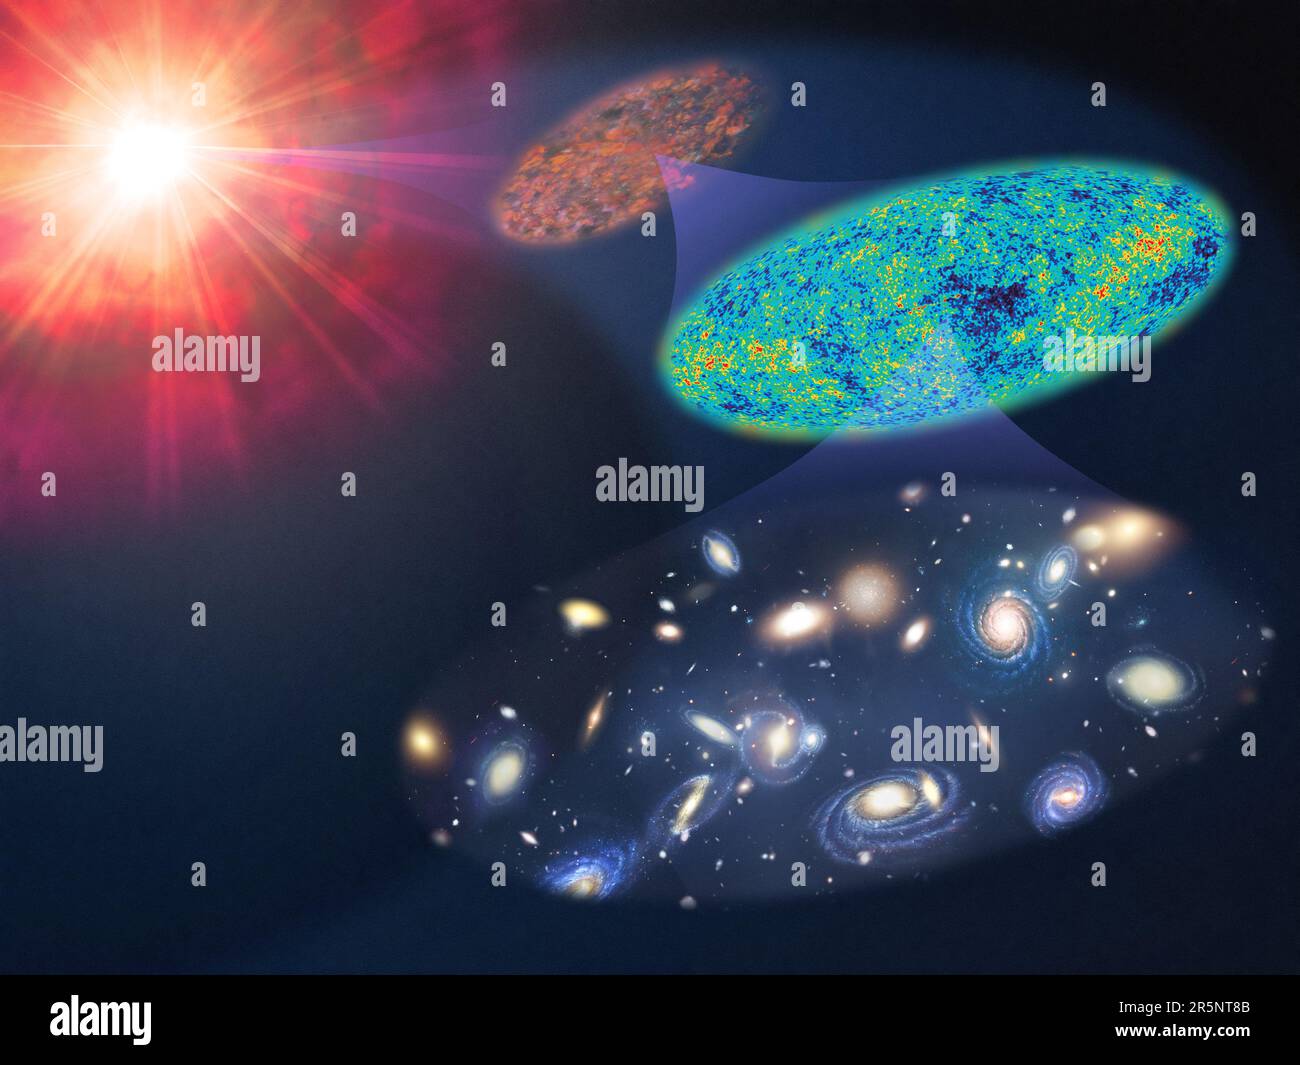 History of the universe, illustration Stock Photo